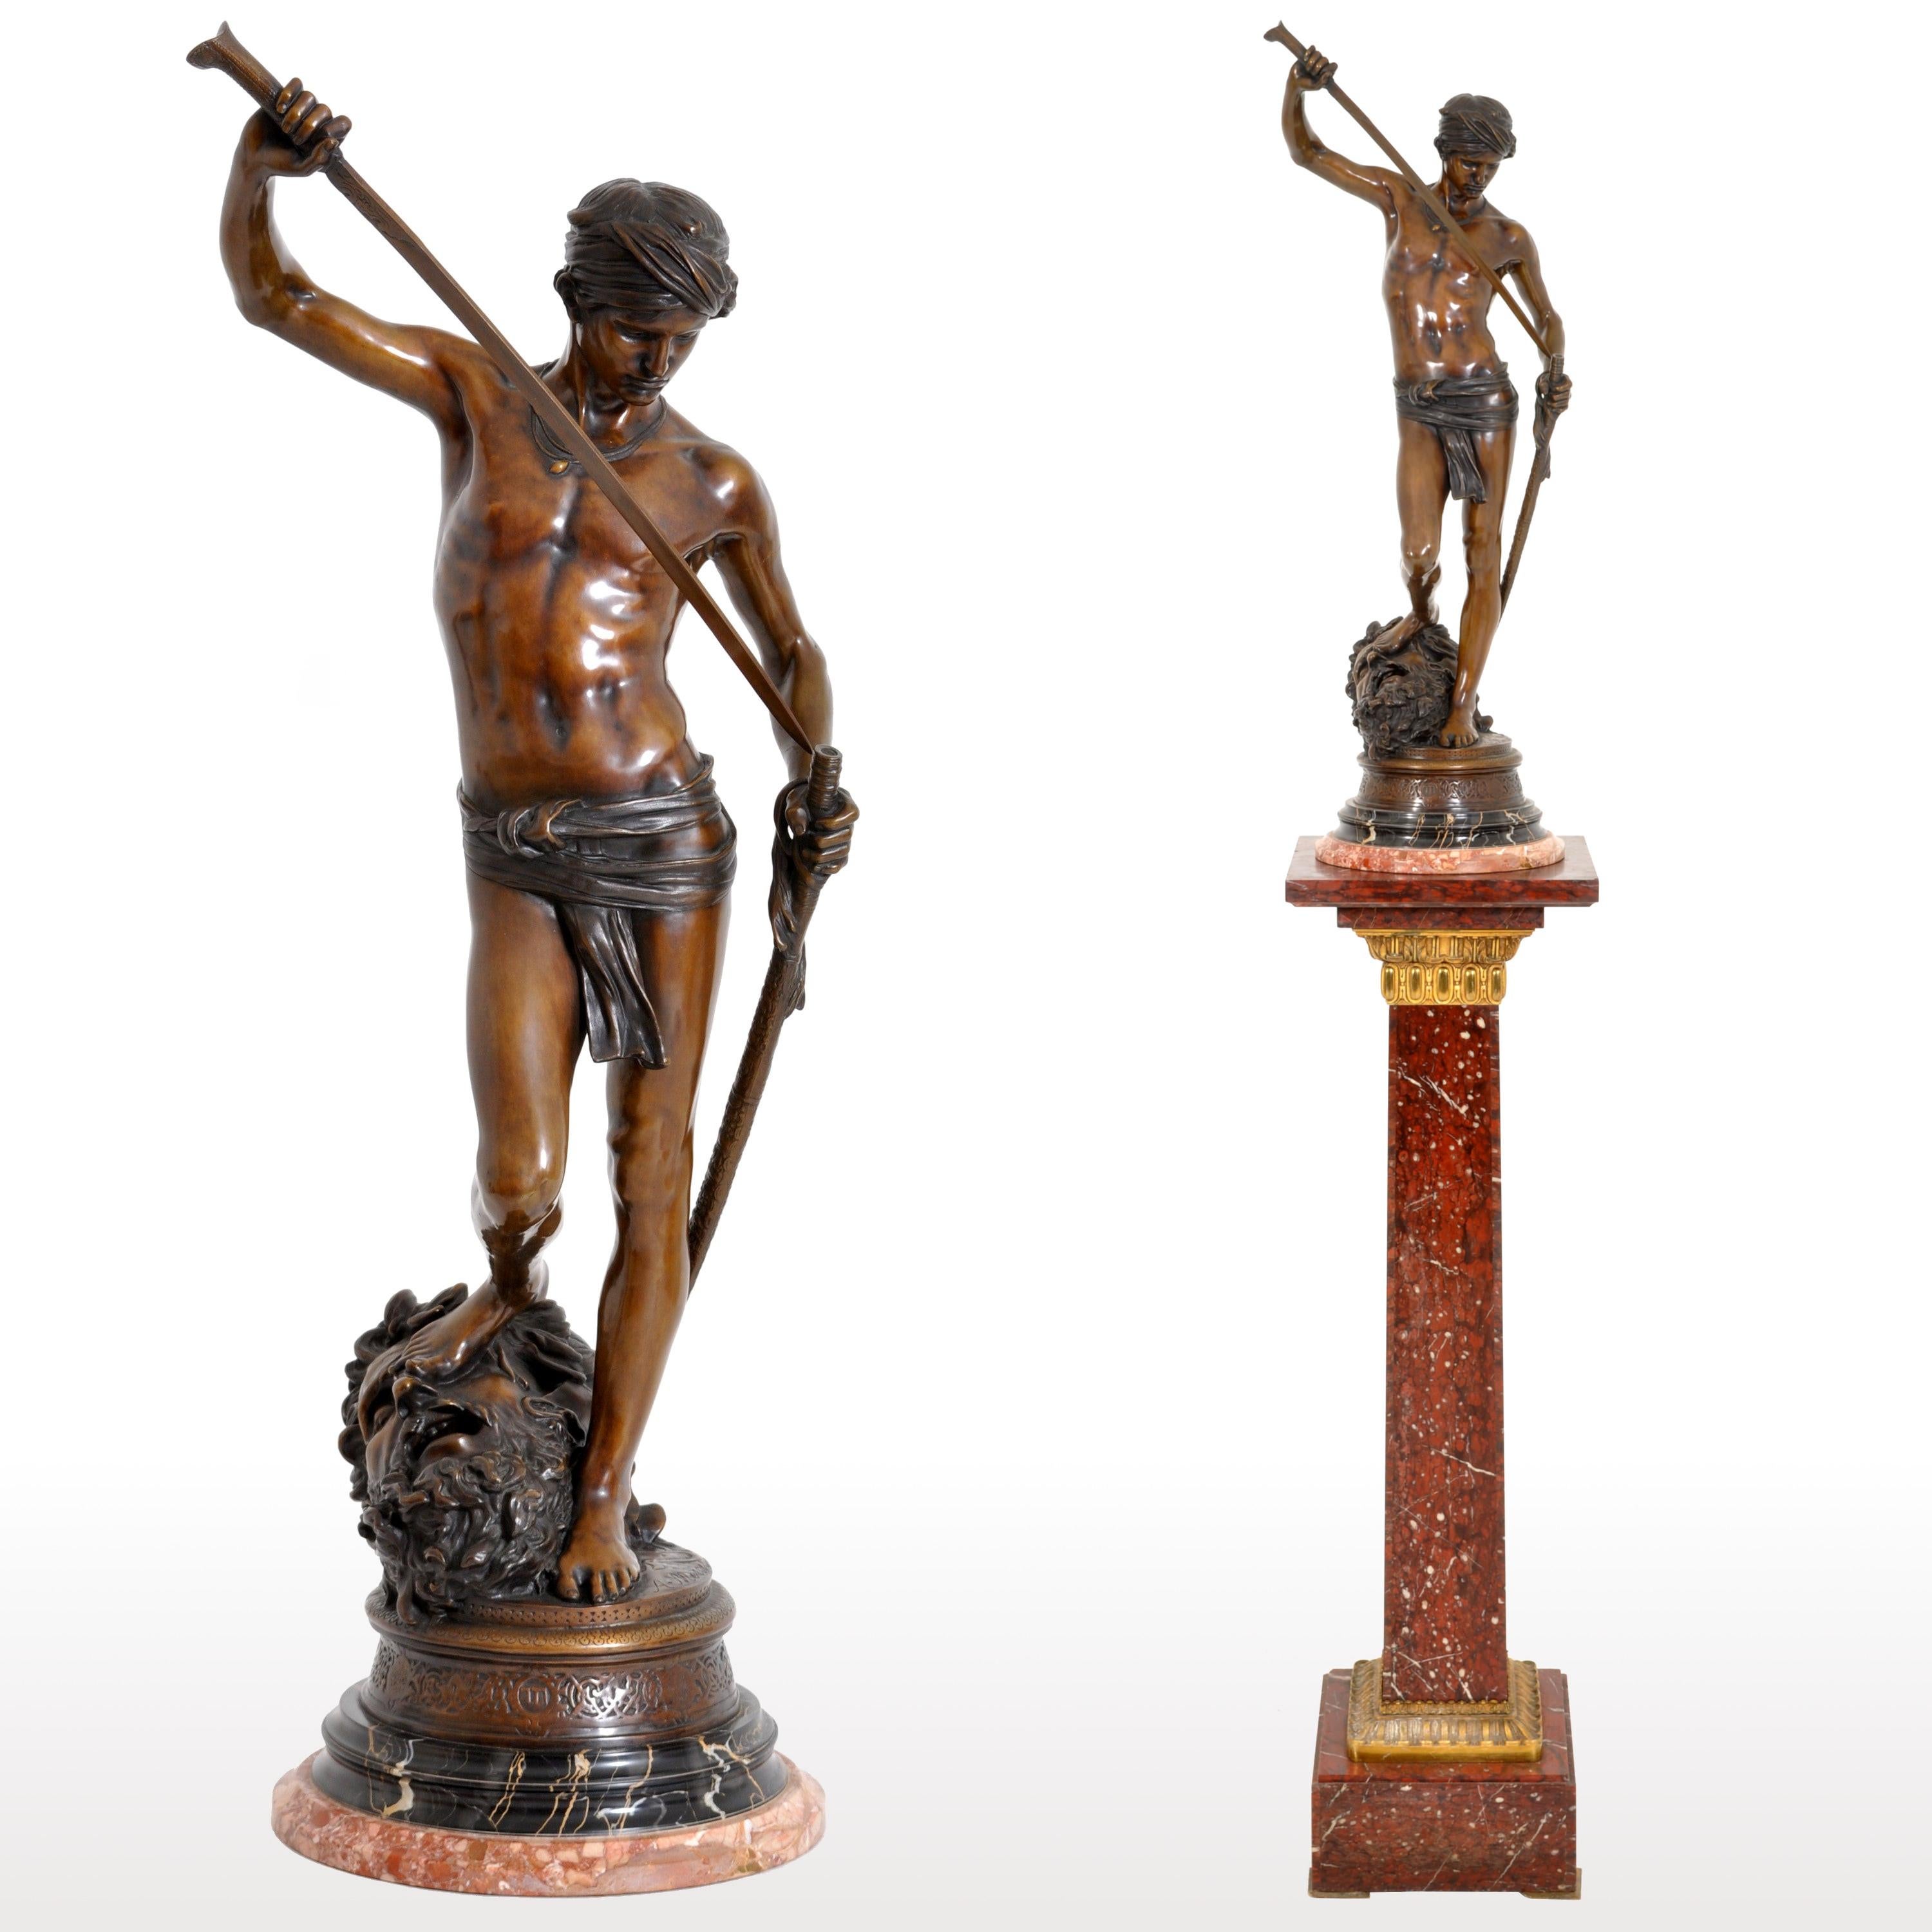 Marius Jean Antonin Mercié Figurative Sculpture - "David Apres le Combat" Antique French Bronze Statue & Marble Column, circa 1880